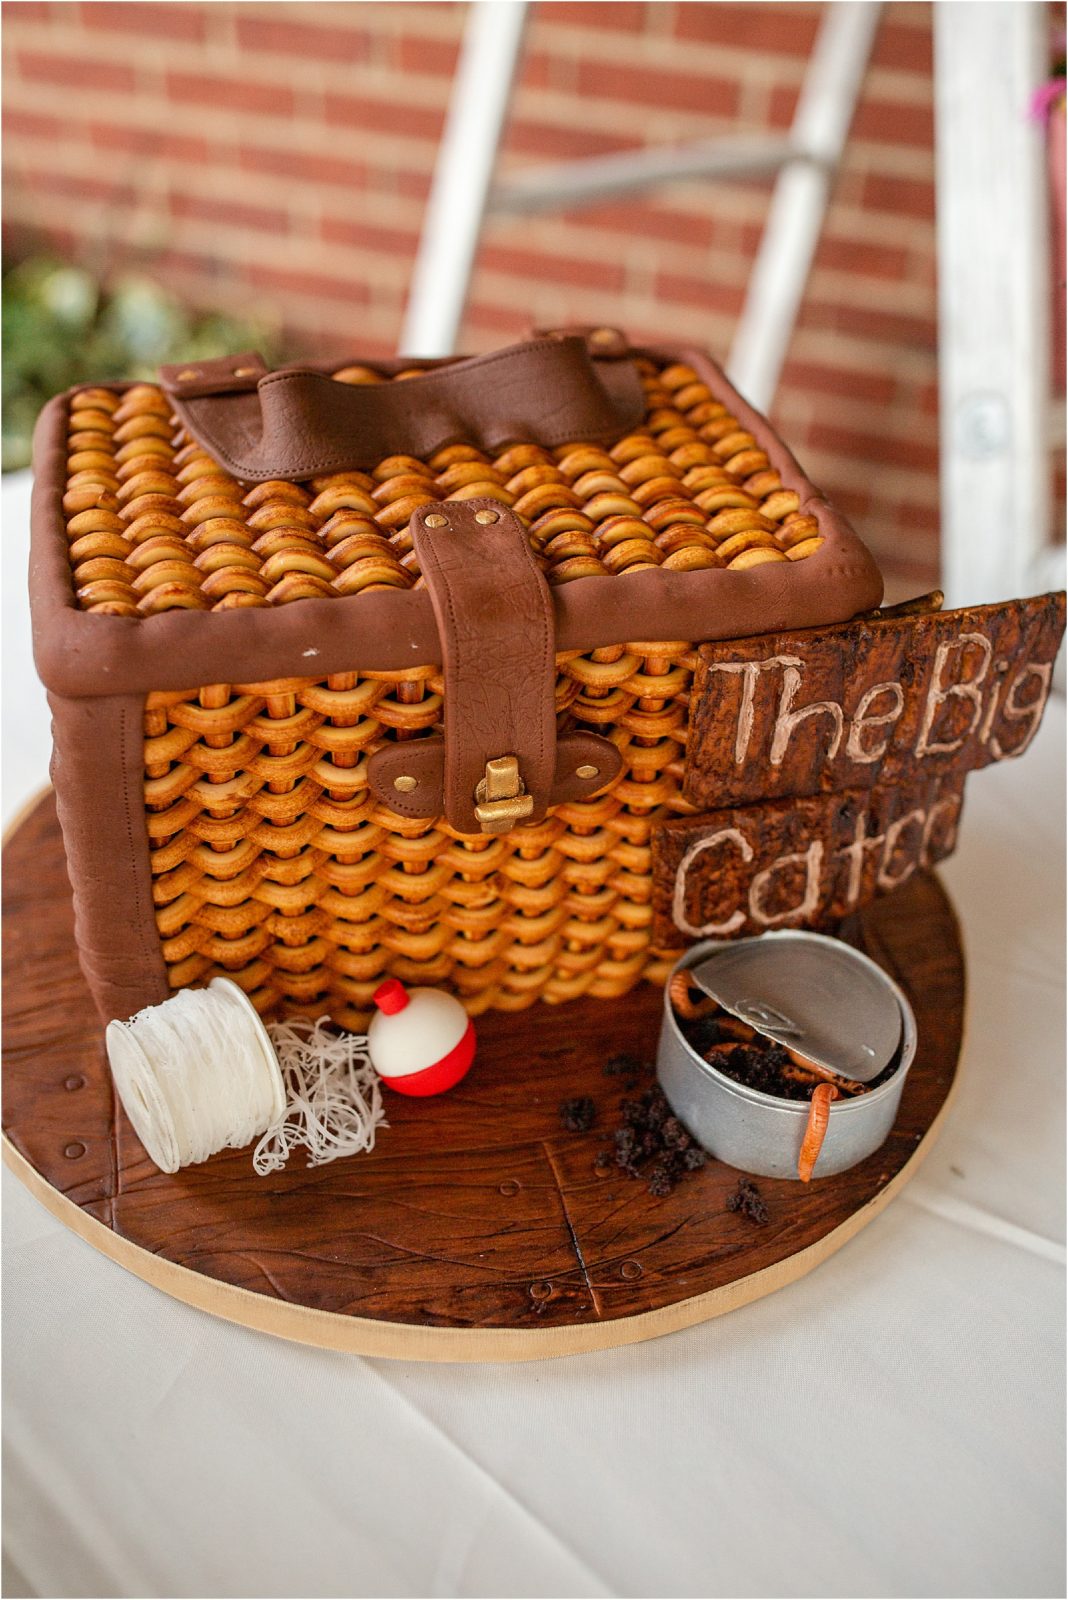 Grooms cake in shape of fishing basket